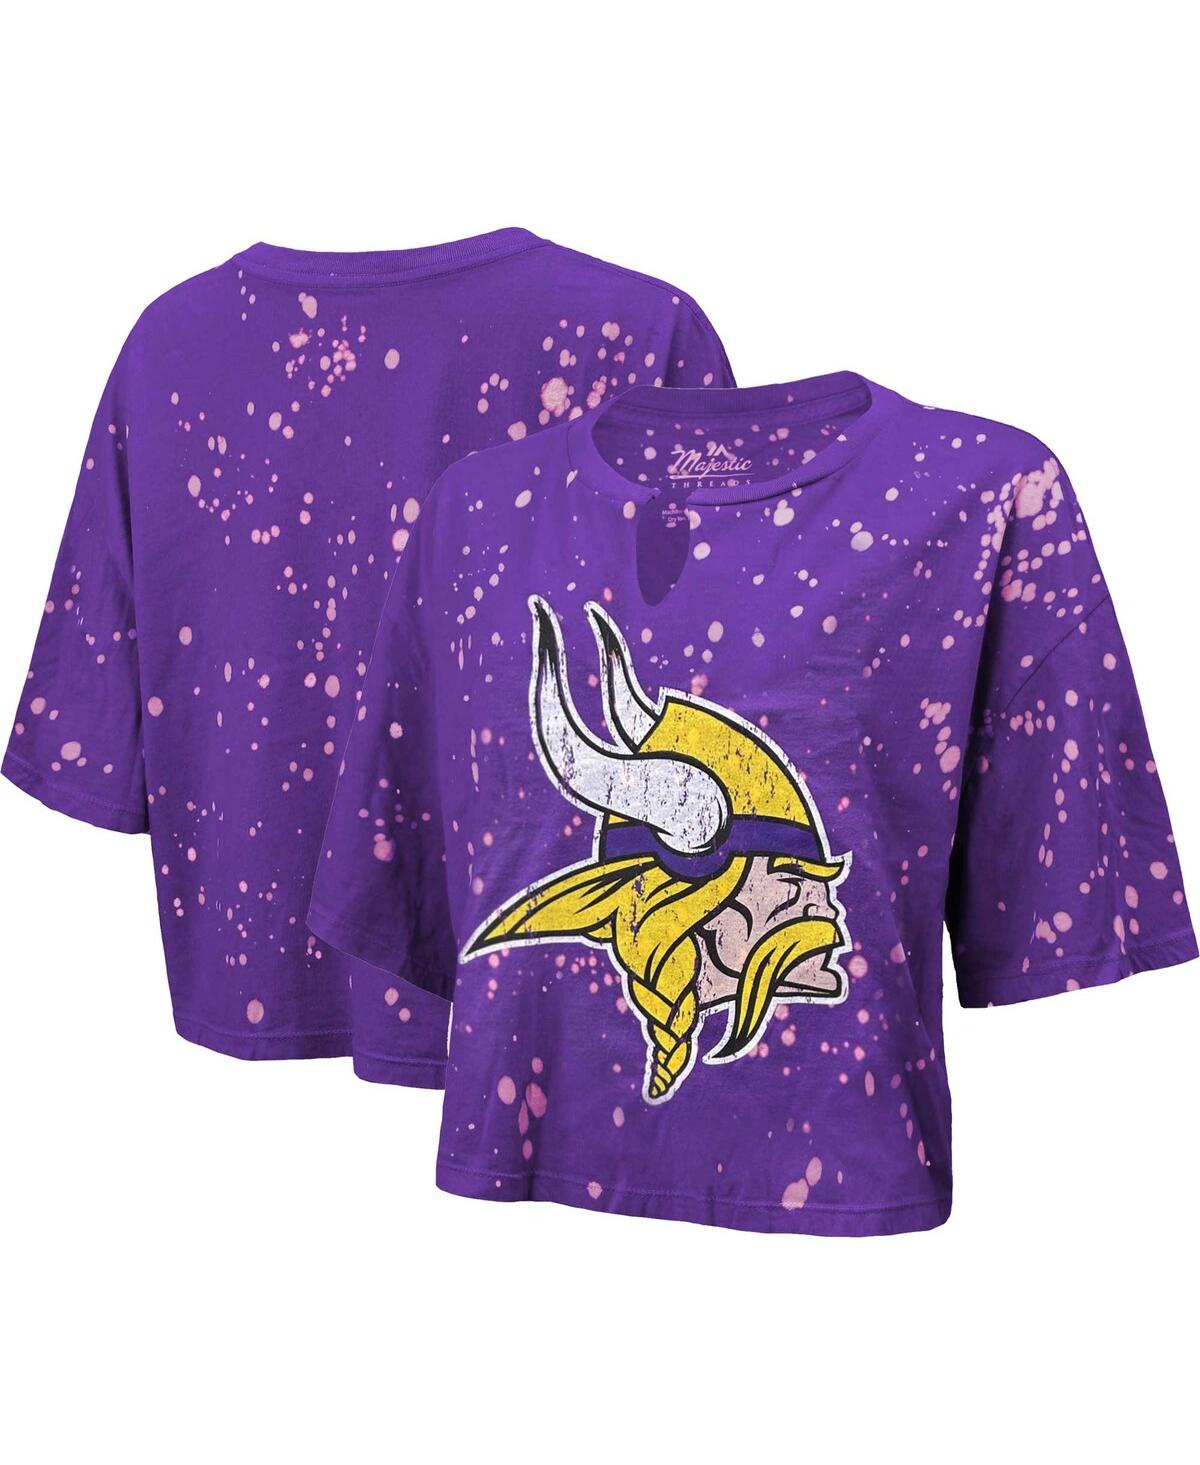 Women's Majestic Threads Purple Distressed Minnesota Vikings Bleach Splatter Notch Neck Crop T-shirt - Purple